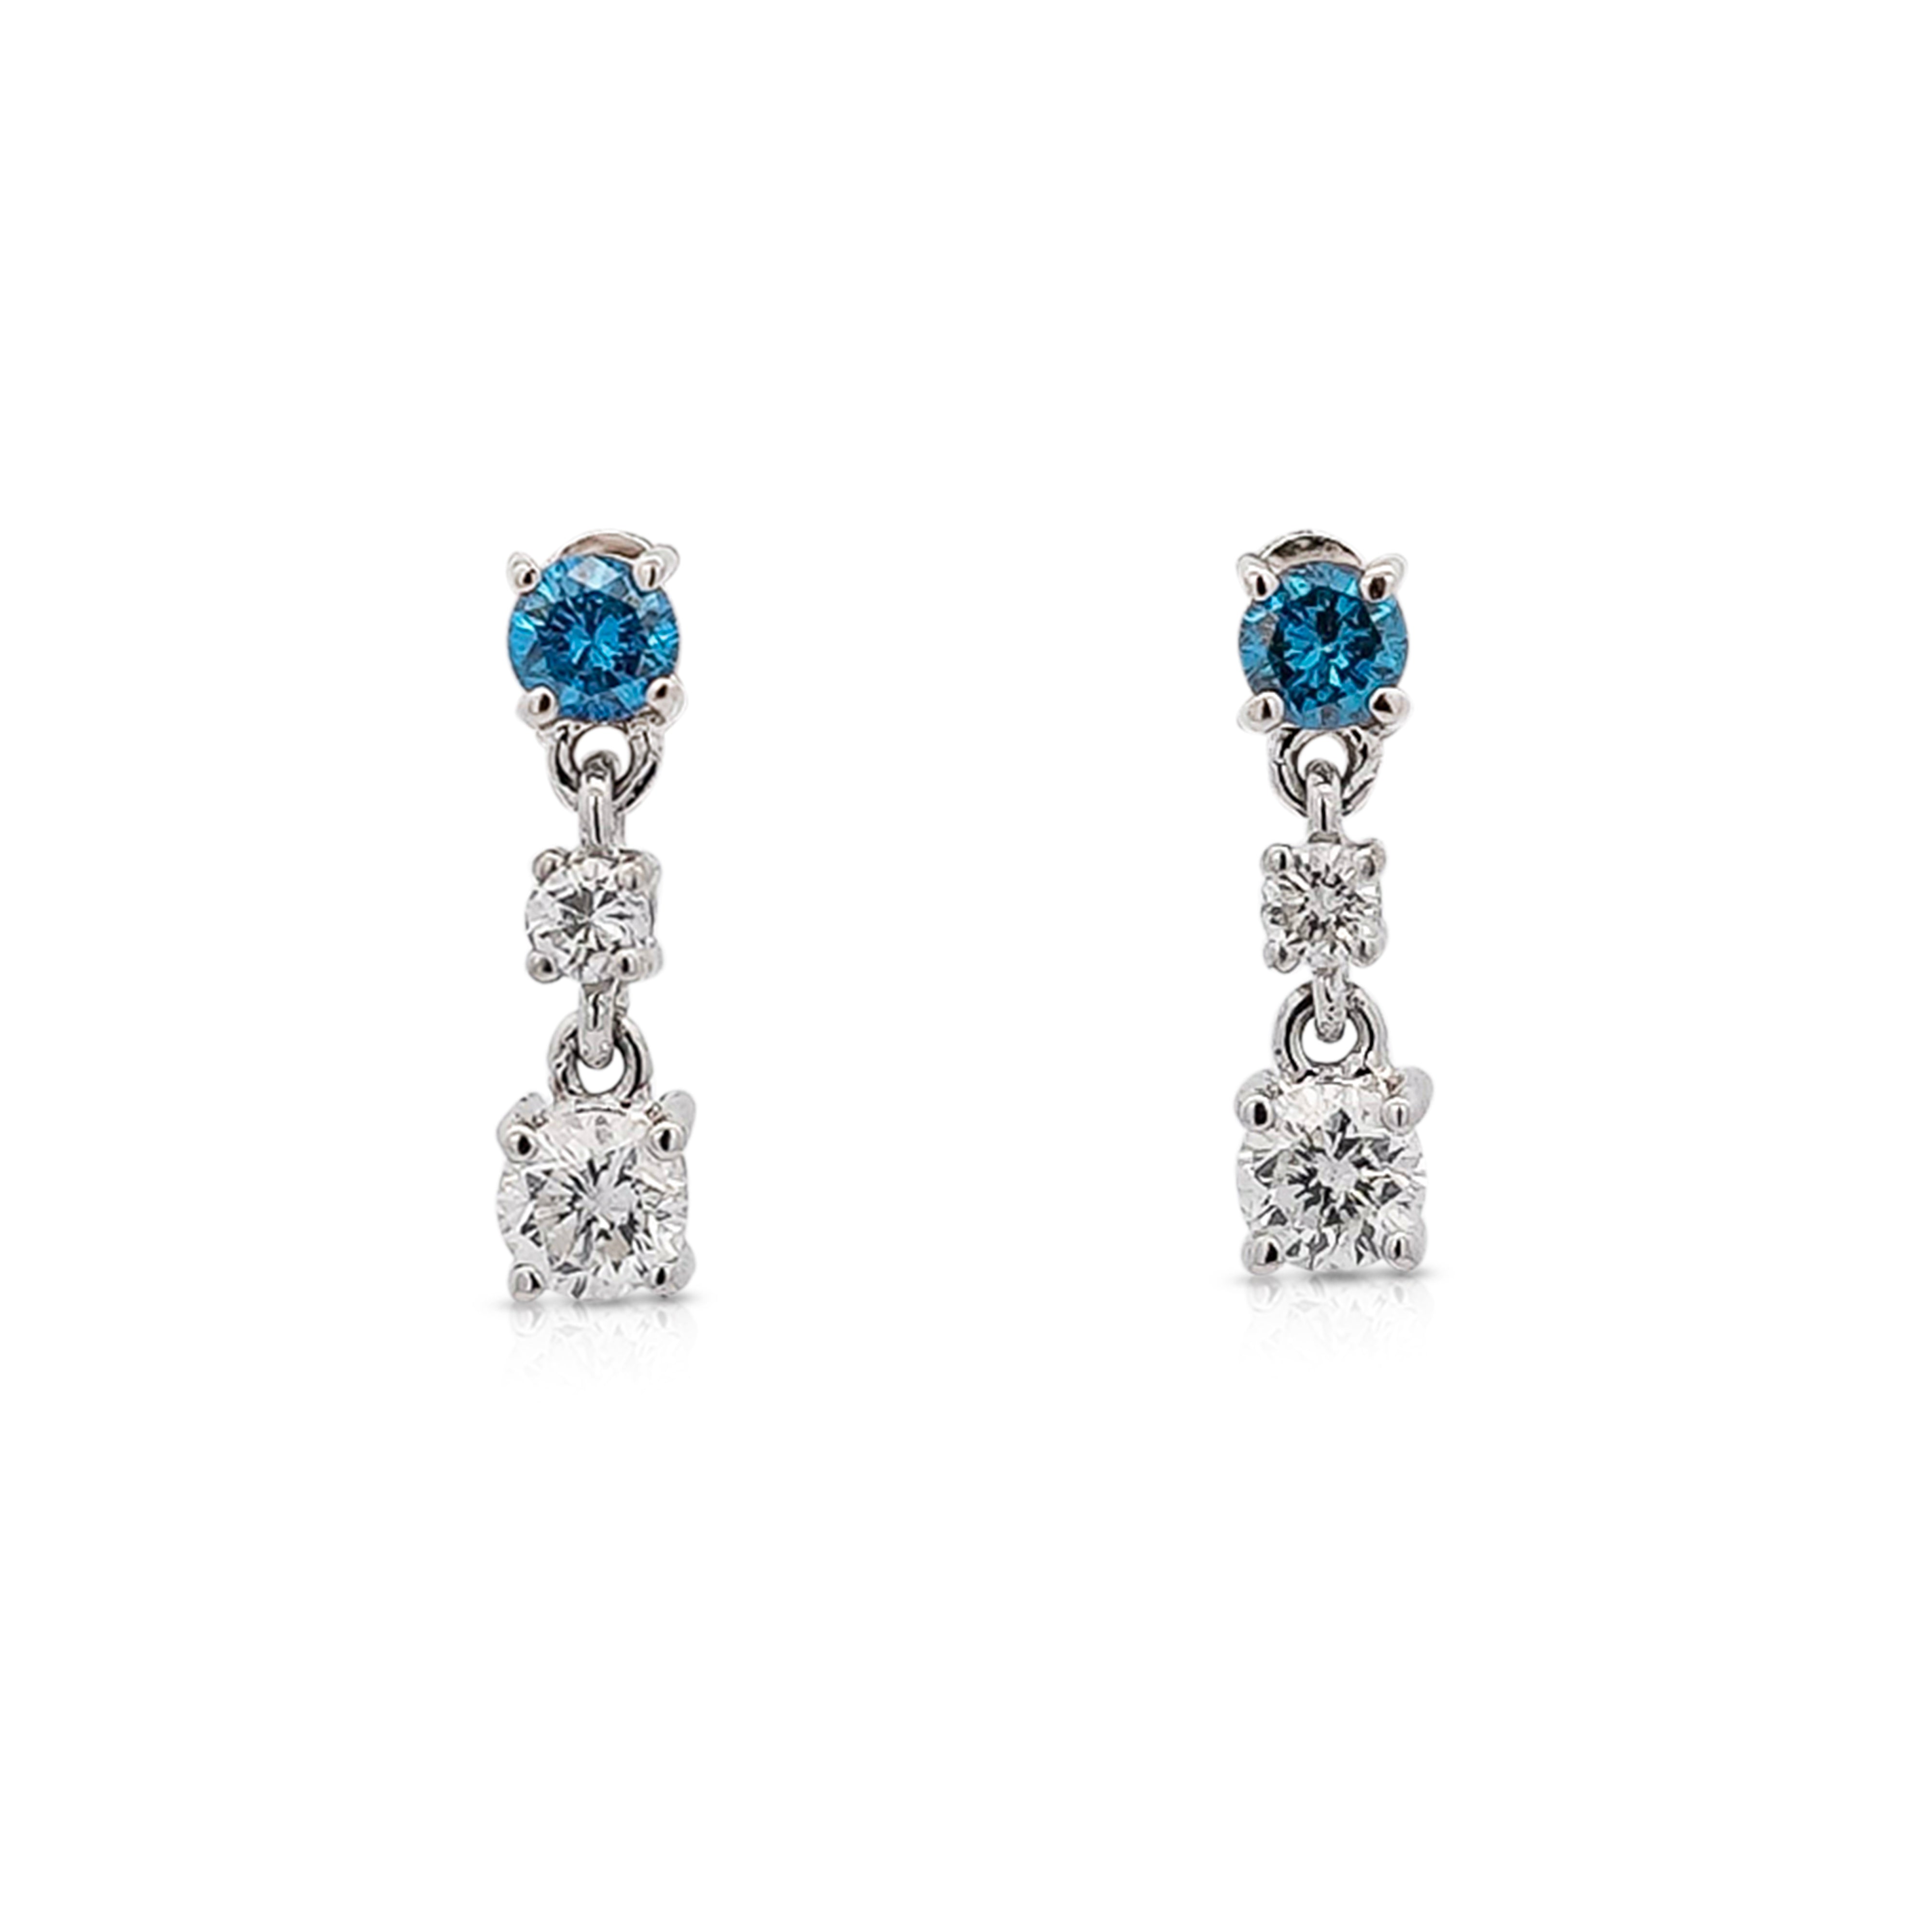 3-Stone-Round-Cut-Natural-Blue-and-White-Diamond-Drop-Earrings-In-18K-White-Gold-Earrings_66eb60a0-c680-4766-91ba-0facb54439cd.jpg